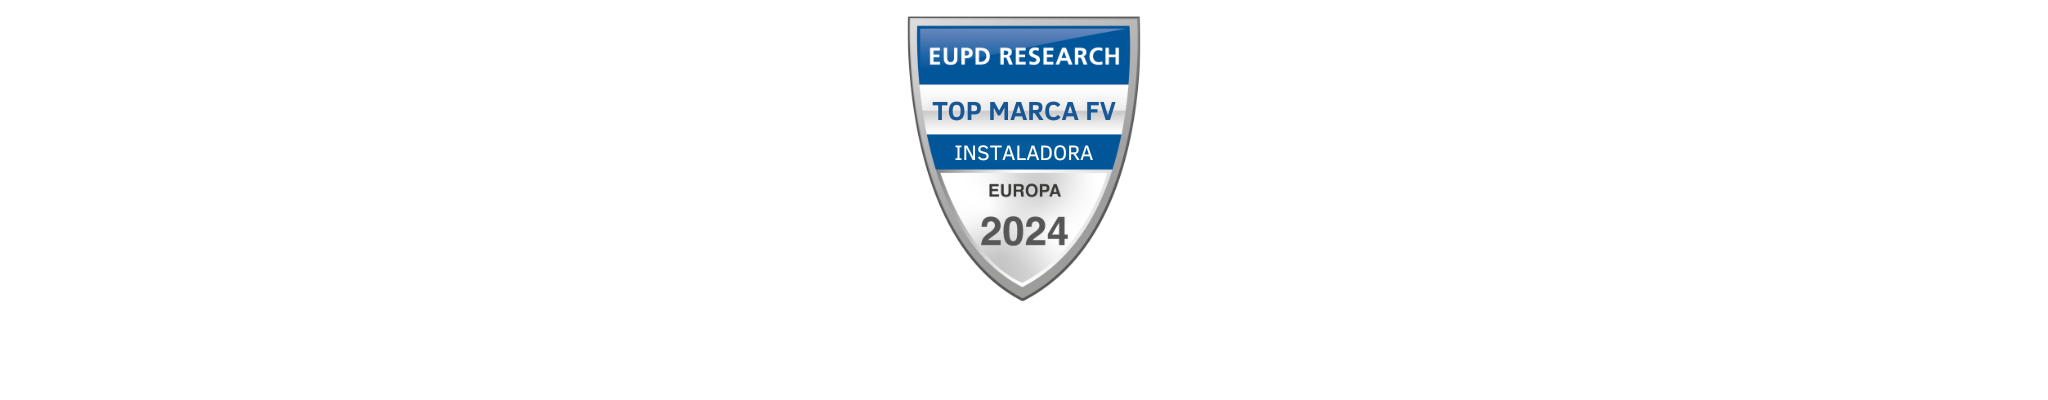 Mejores Instaladores Europa 2024